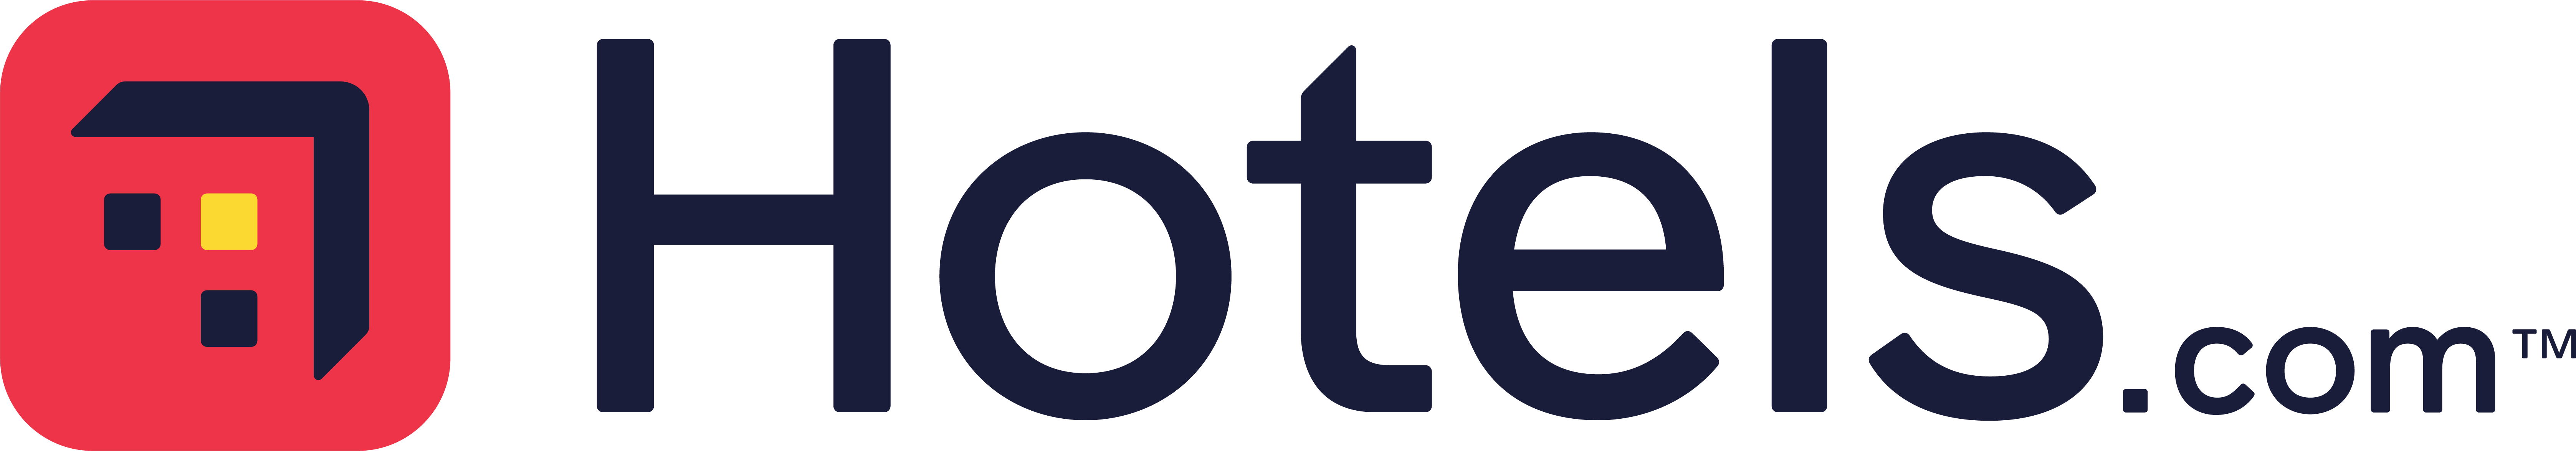 hotels-com-logo.png